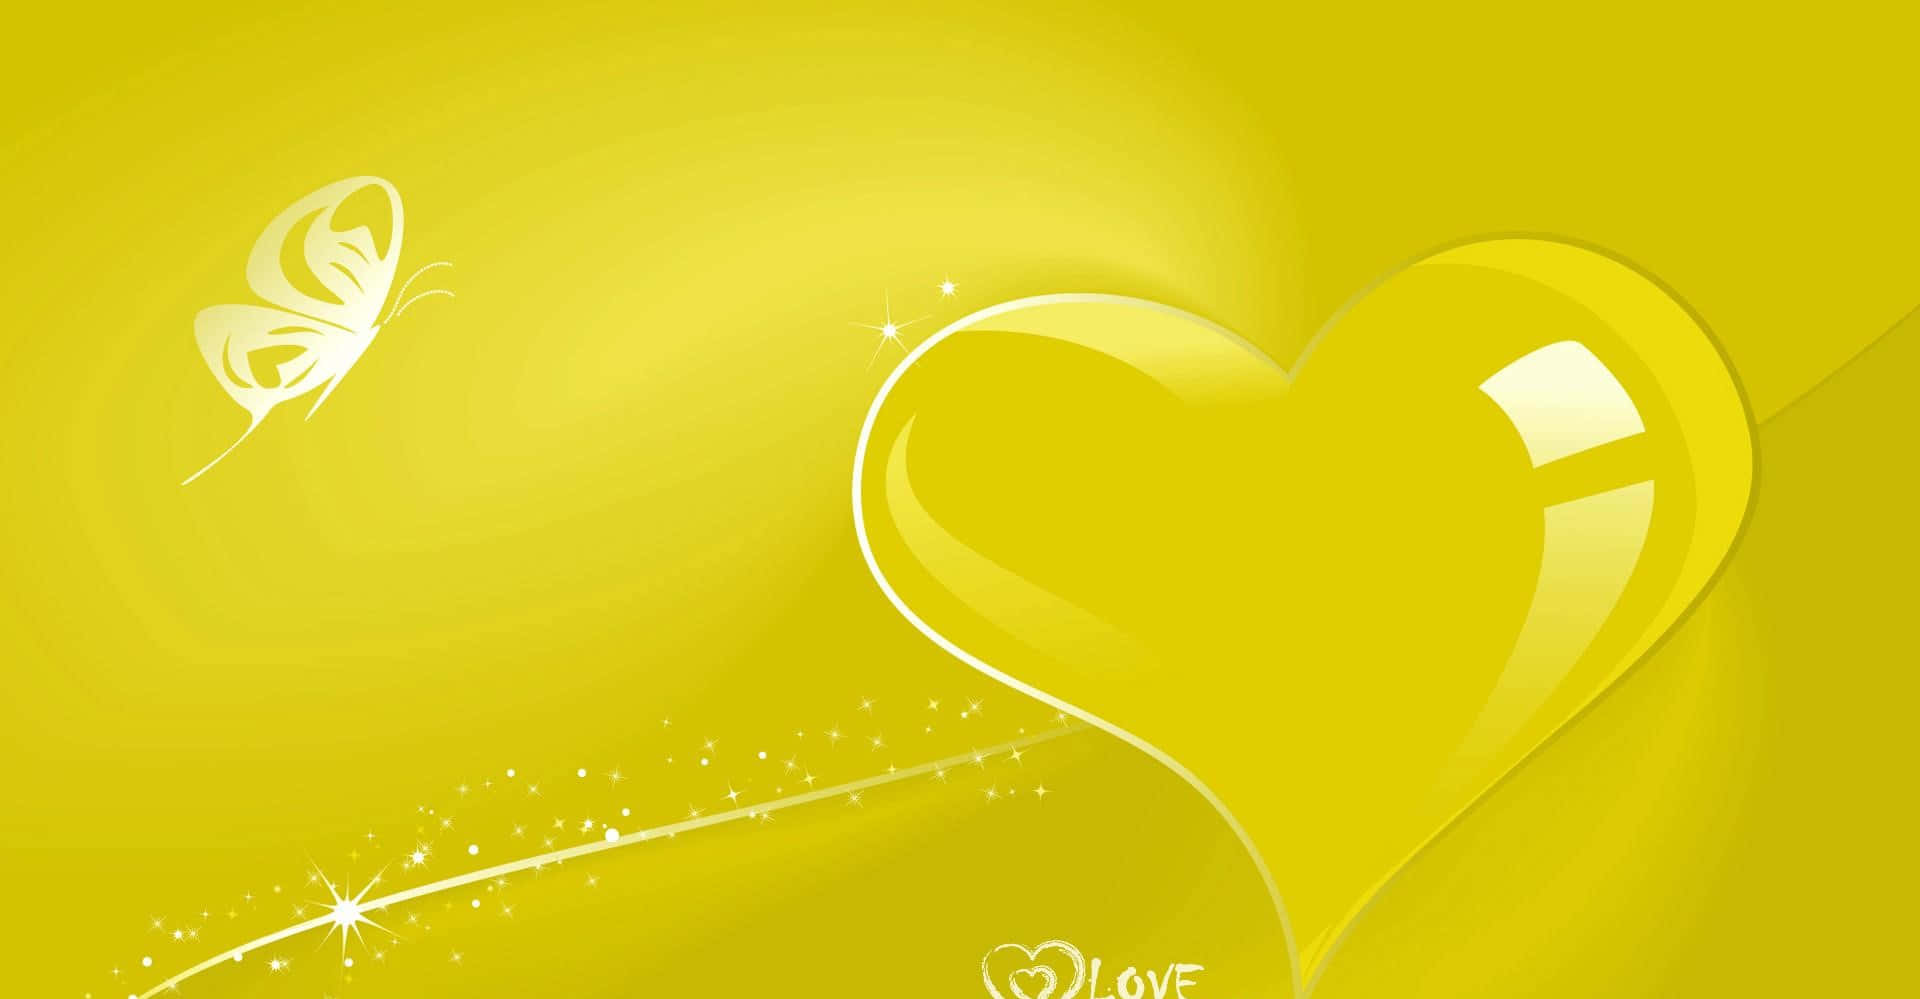 Radiant Yellow Heart Against Vibrant Background Wallpaper